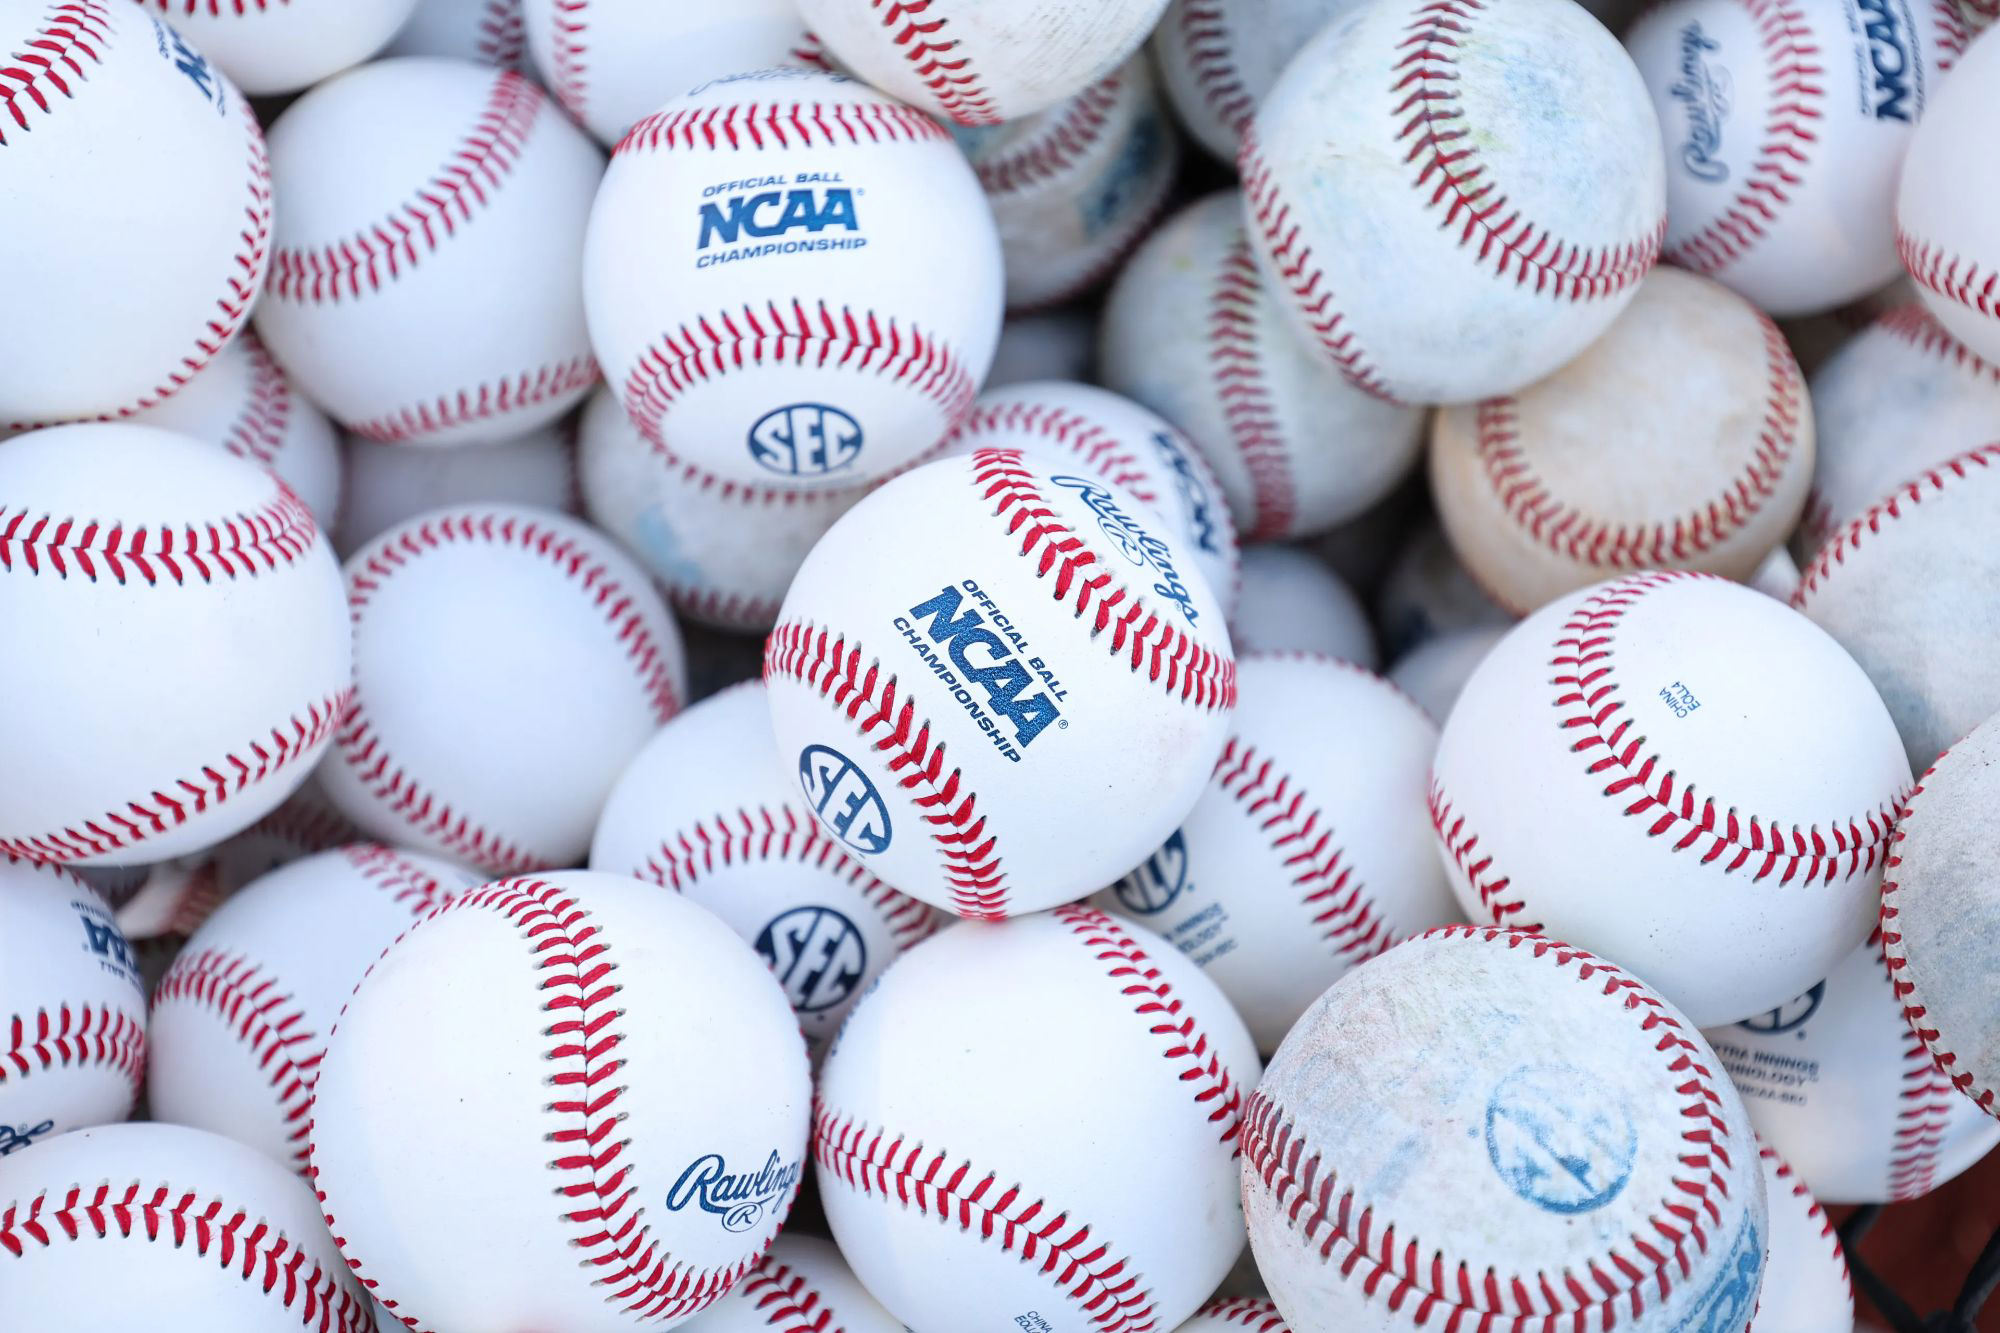 Japanese phenom Rintaro Sasaki snubs NPB to play NCAA baseball